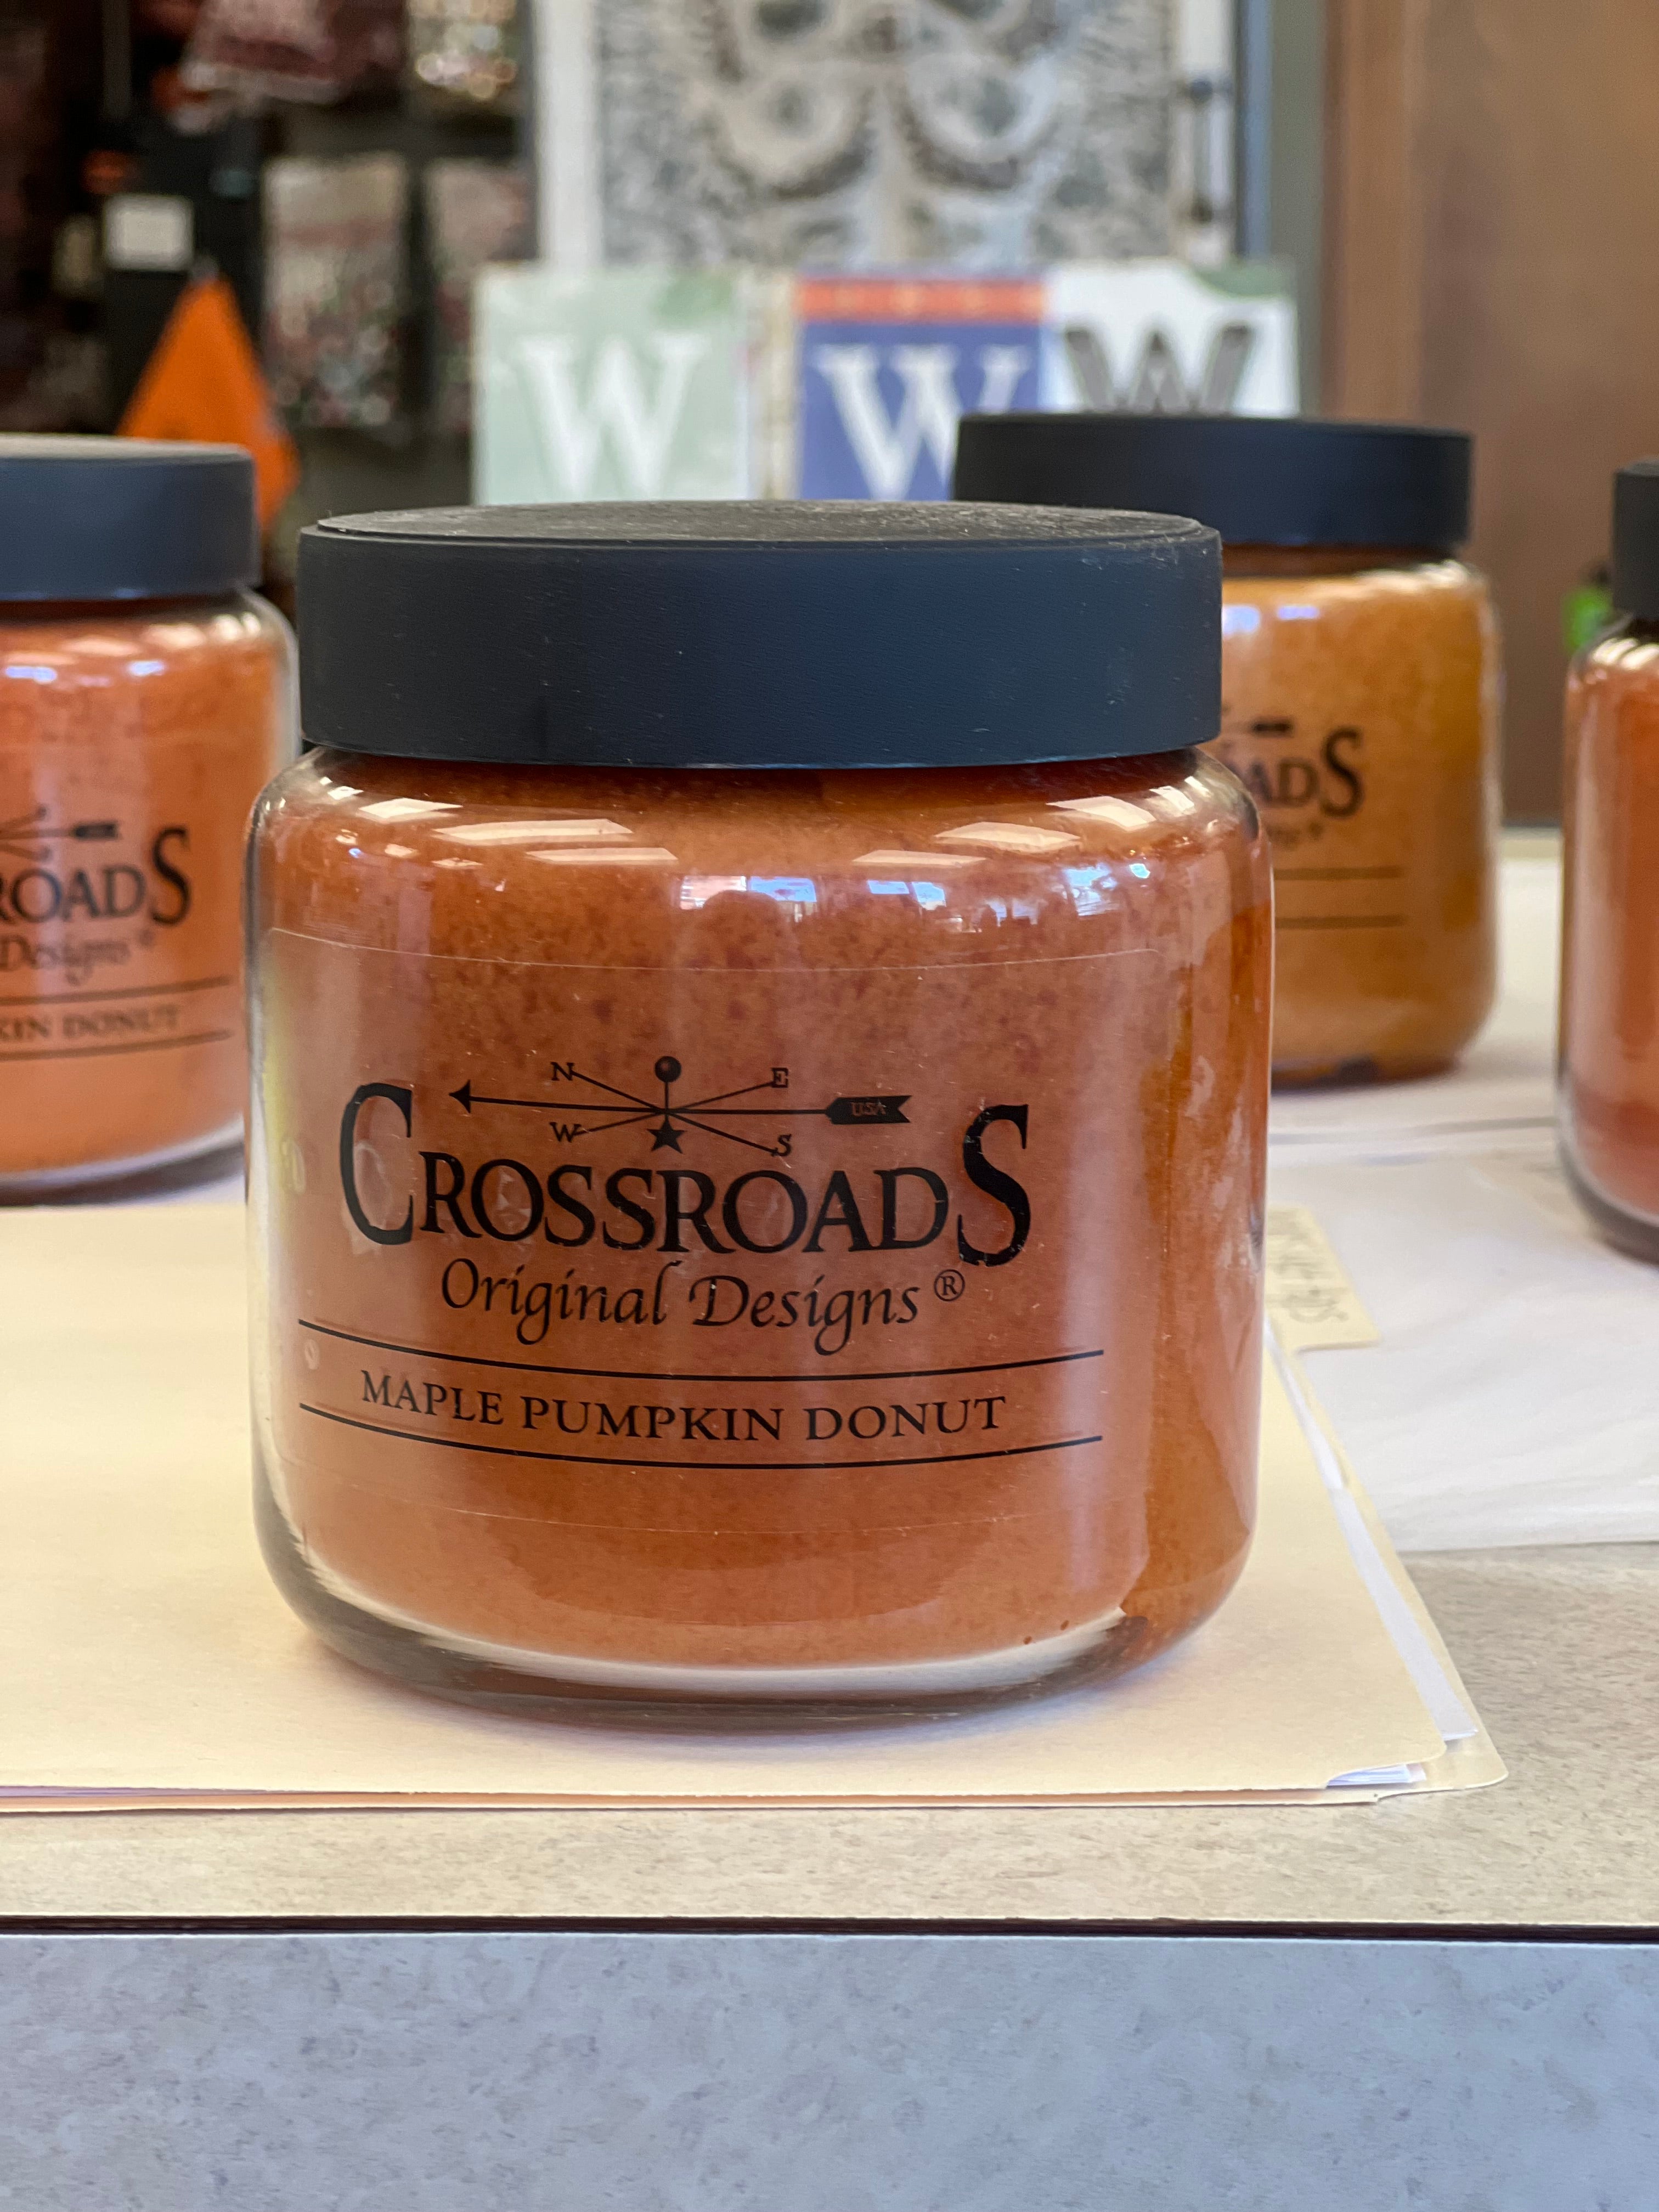 Crossroads Original Designs Candle Beads 231-6075 – Good's Store Online